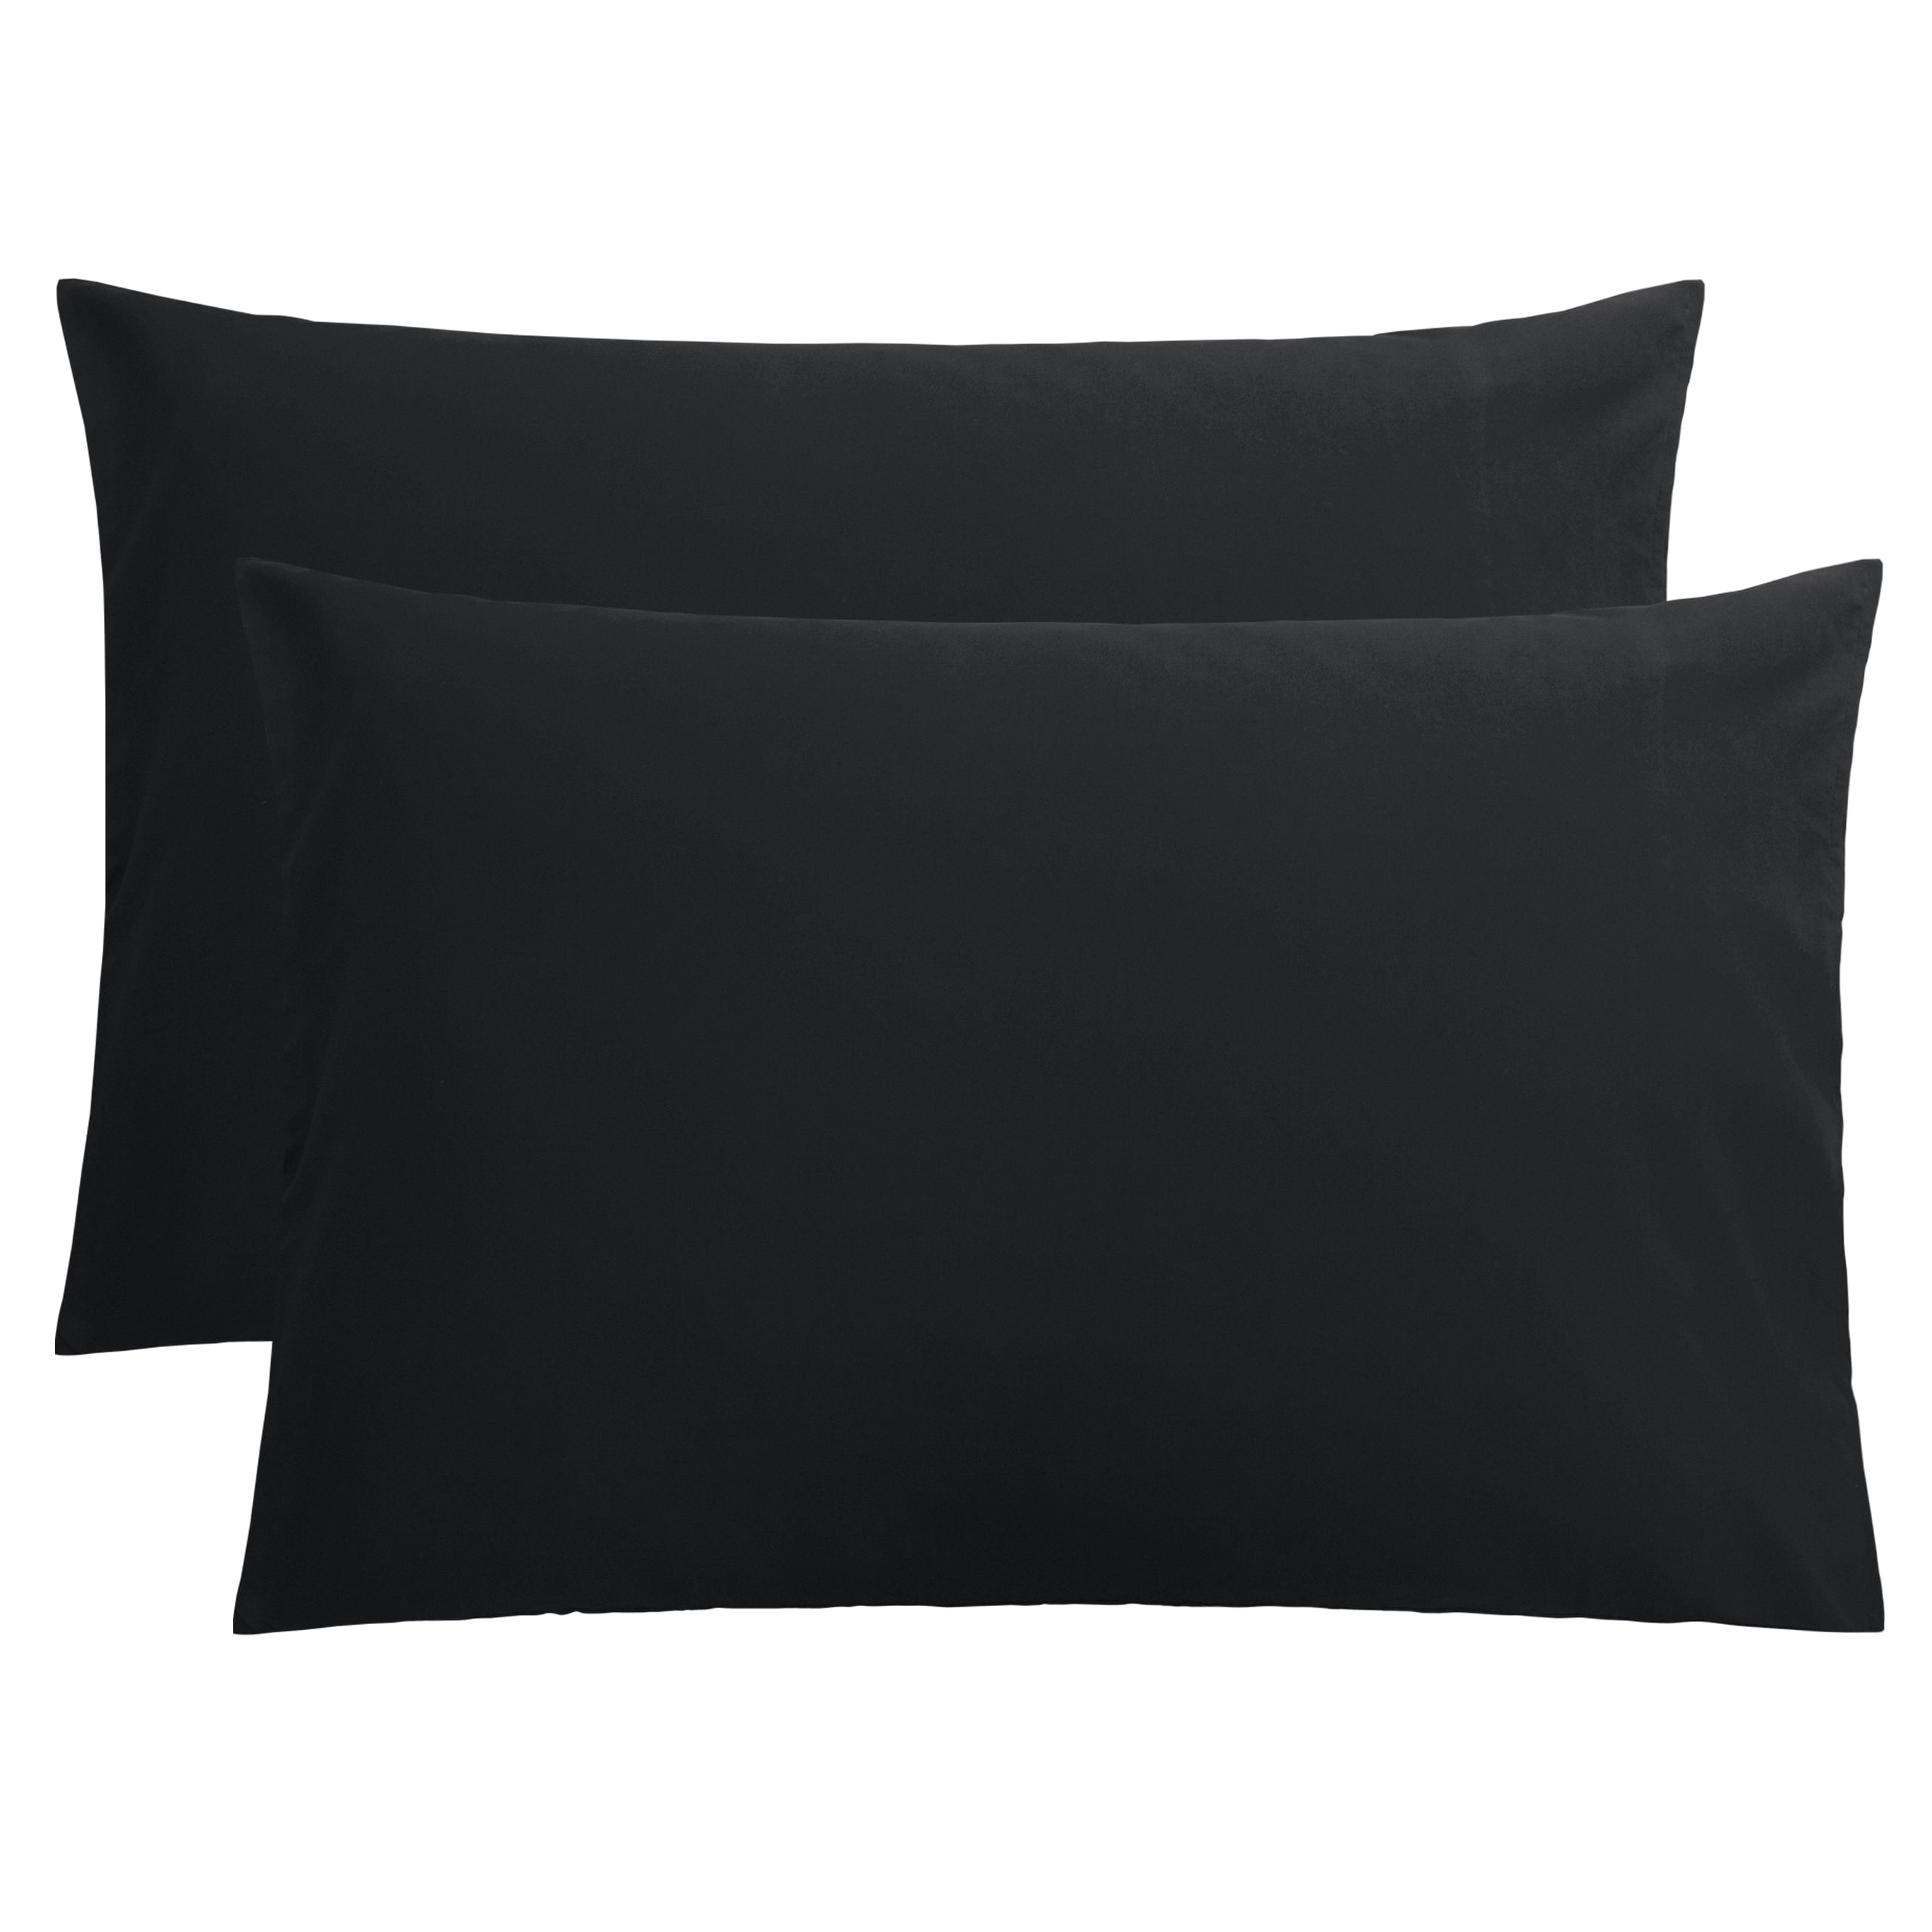 Standard King CK Size Premium Quality Ultra Soft 2 PCS Microfiber Pillowcase 